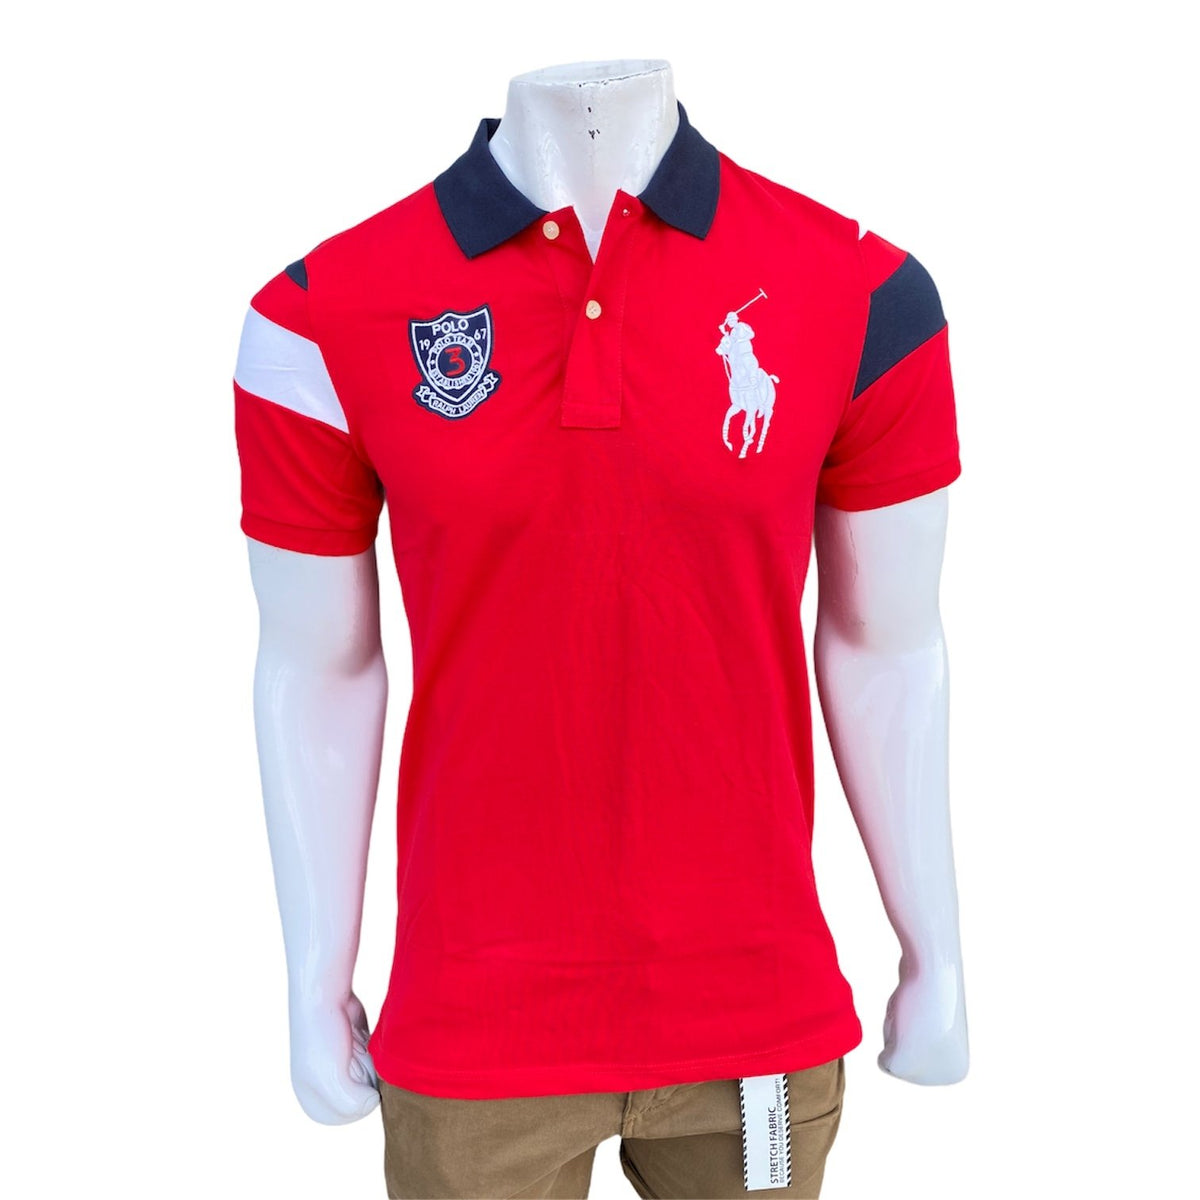 RL red B_P exclusive polo shirt